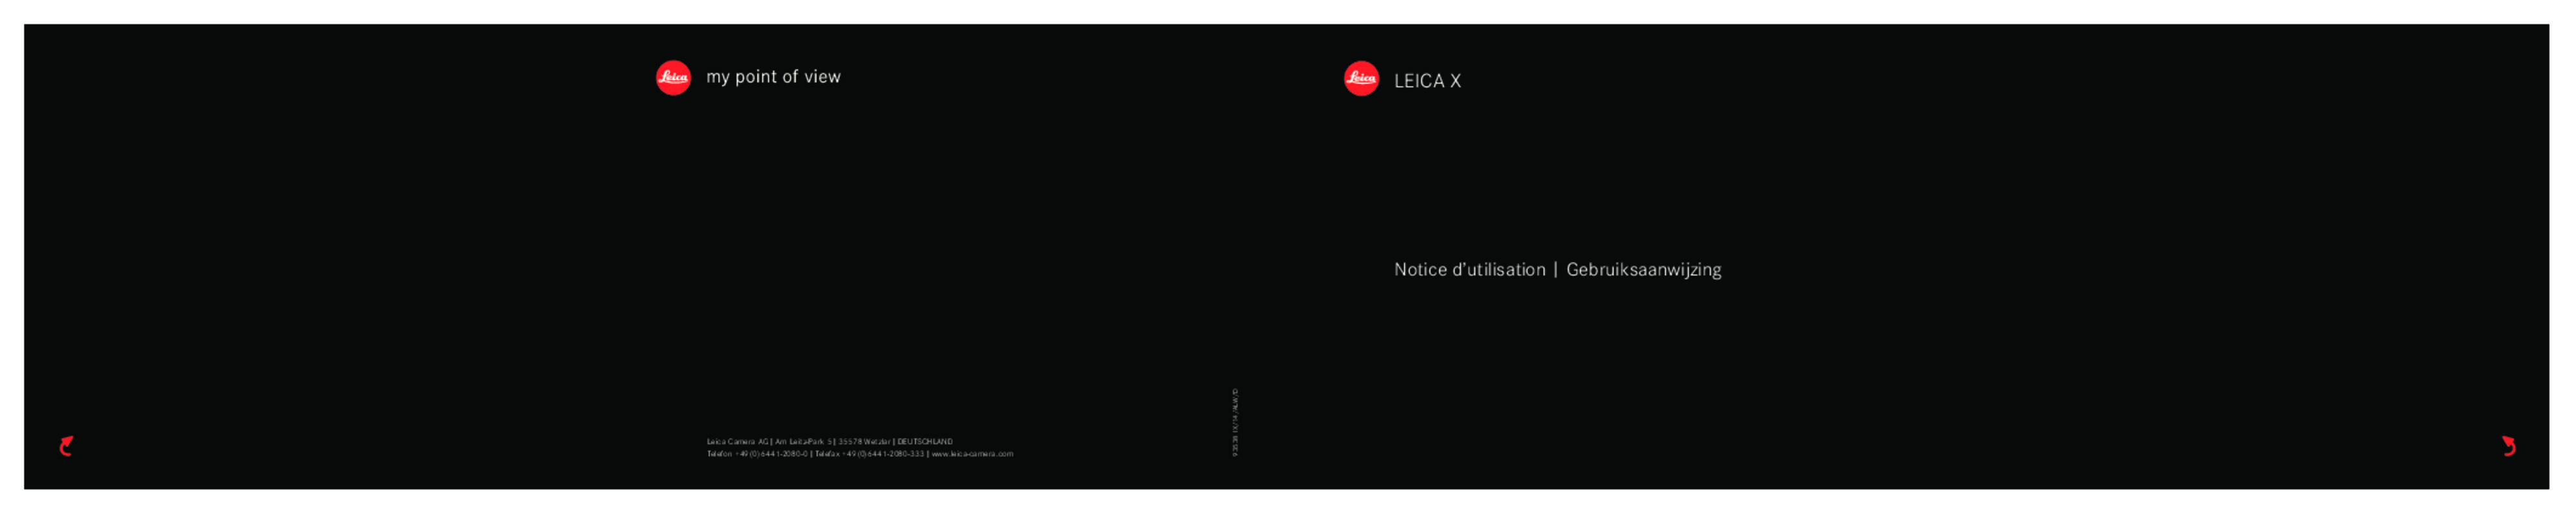 Guide utilisation LEICA X  de la marque LEICA